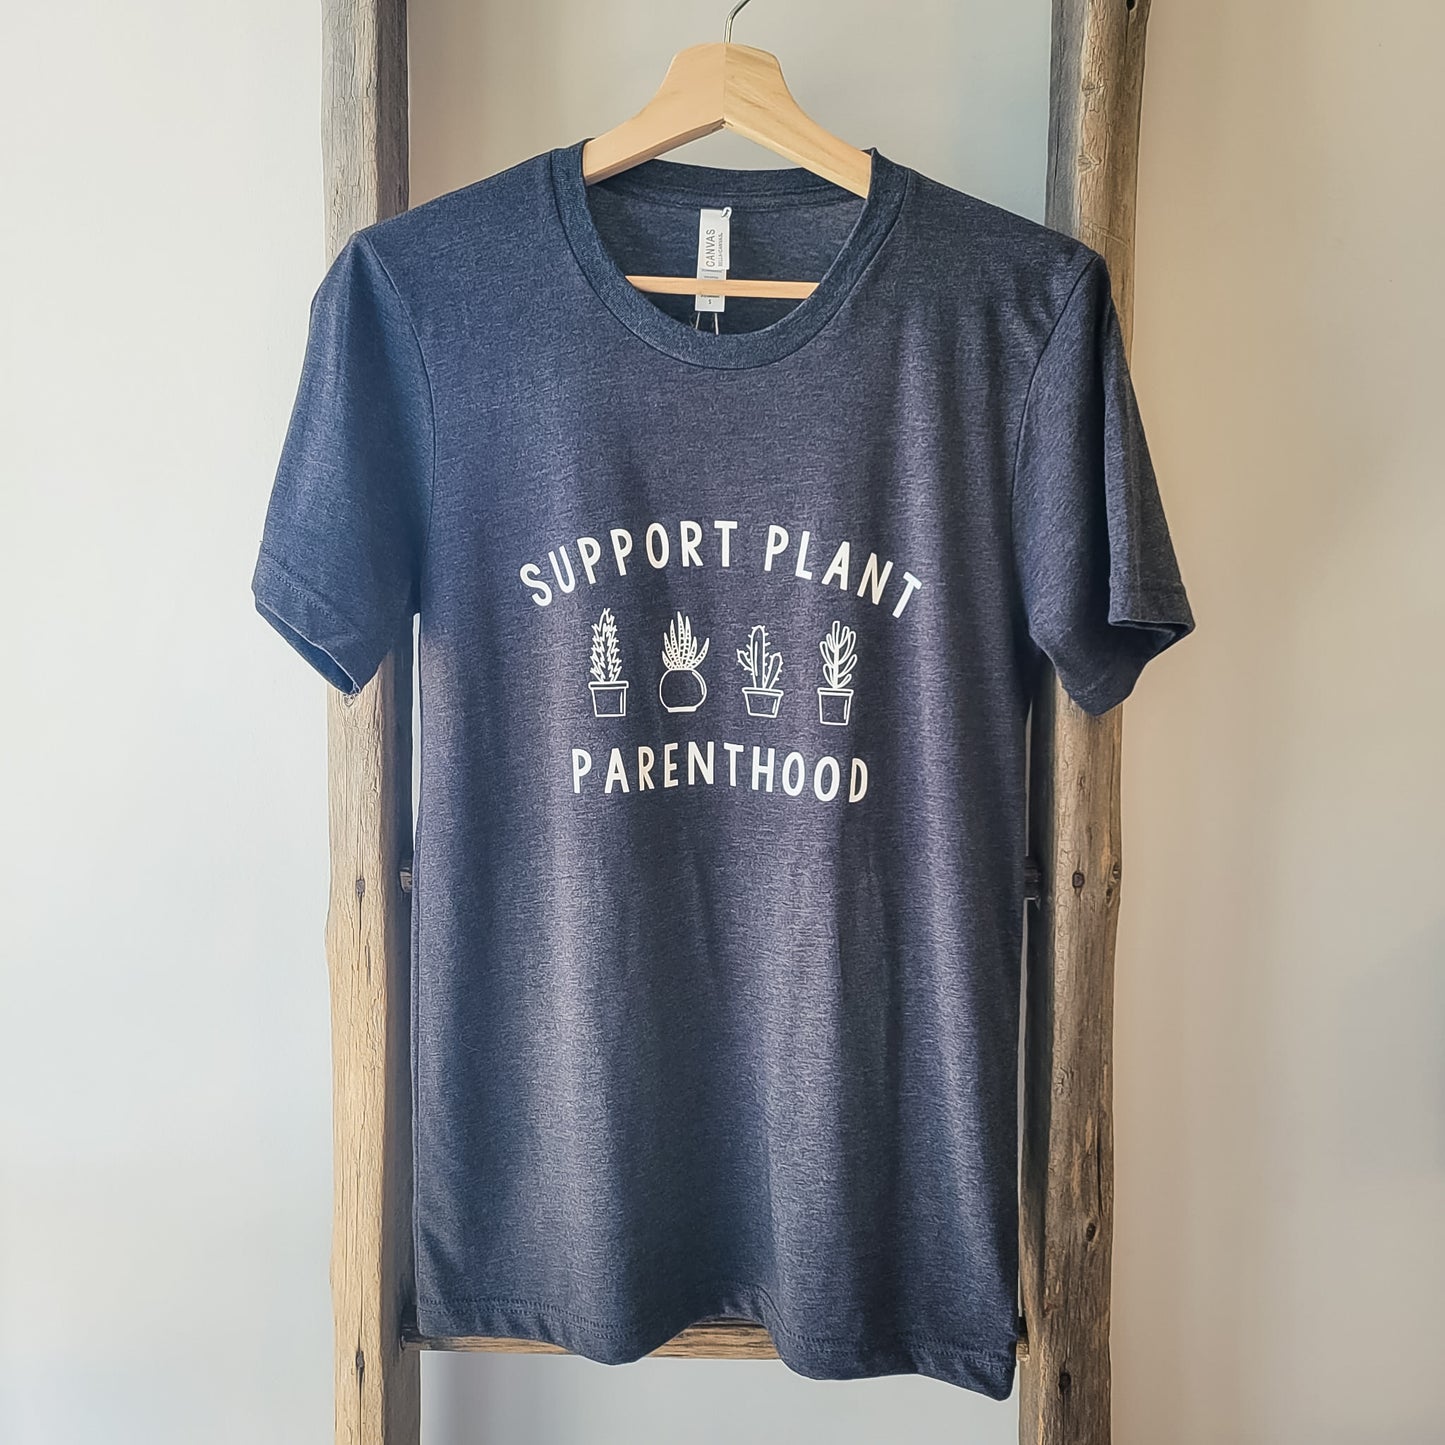 Support Plant Parenthood T-Shirt